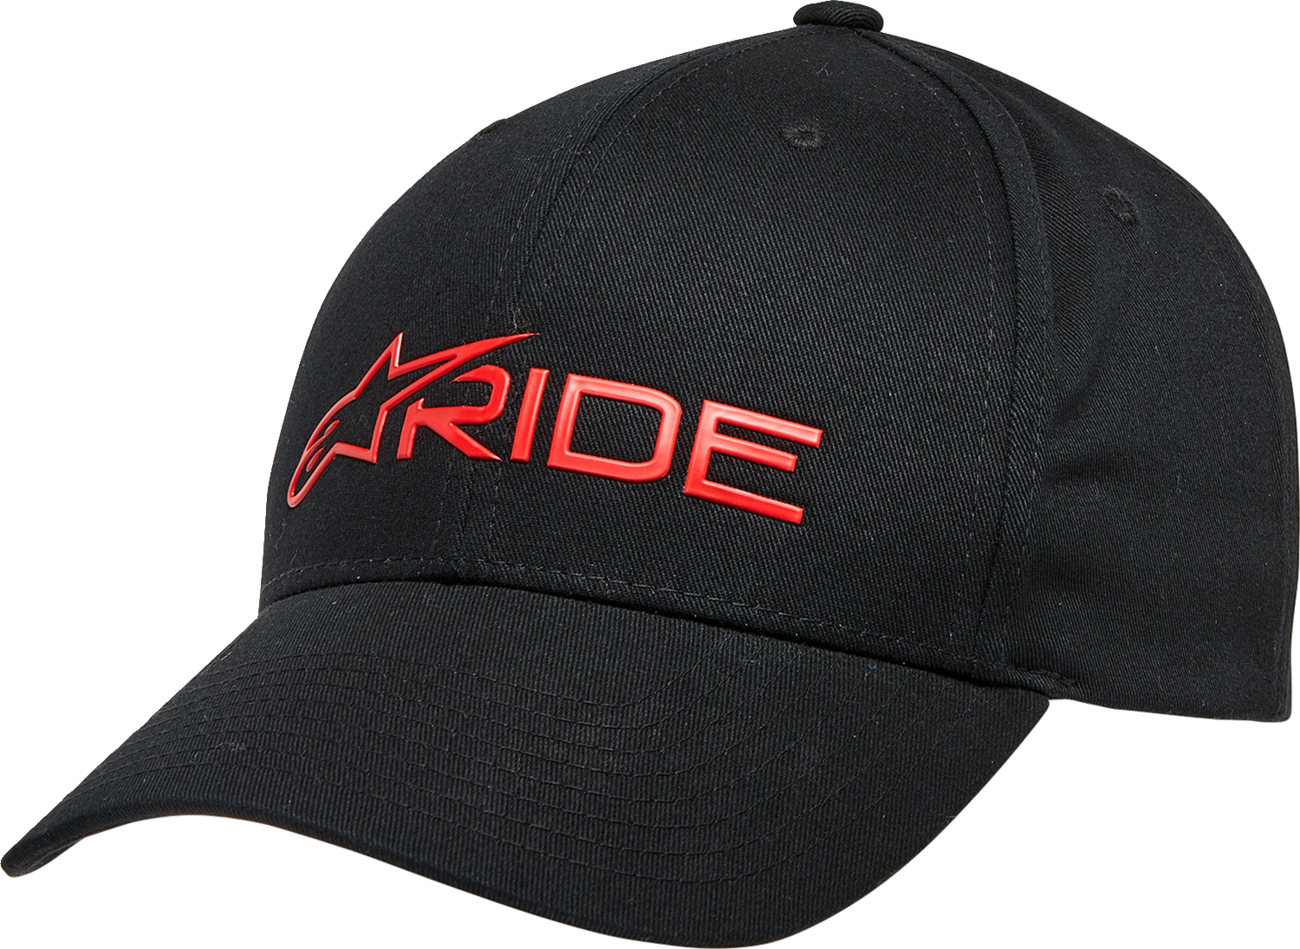 ALPINESTARS Ride 3.0 Hat - Black/Red - One Size 1232-81030-1030